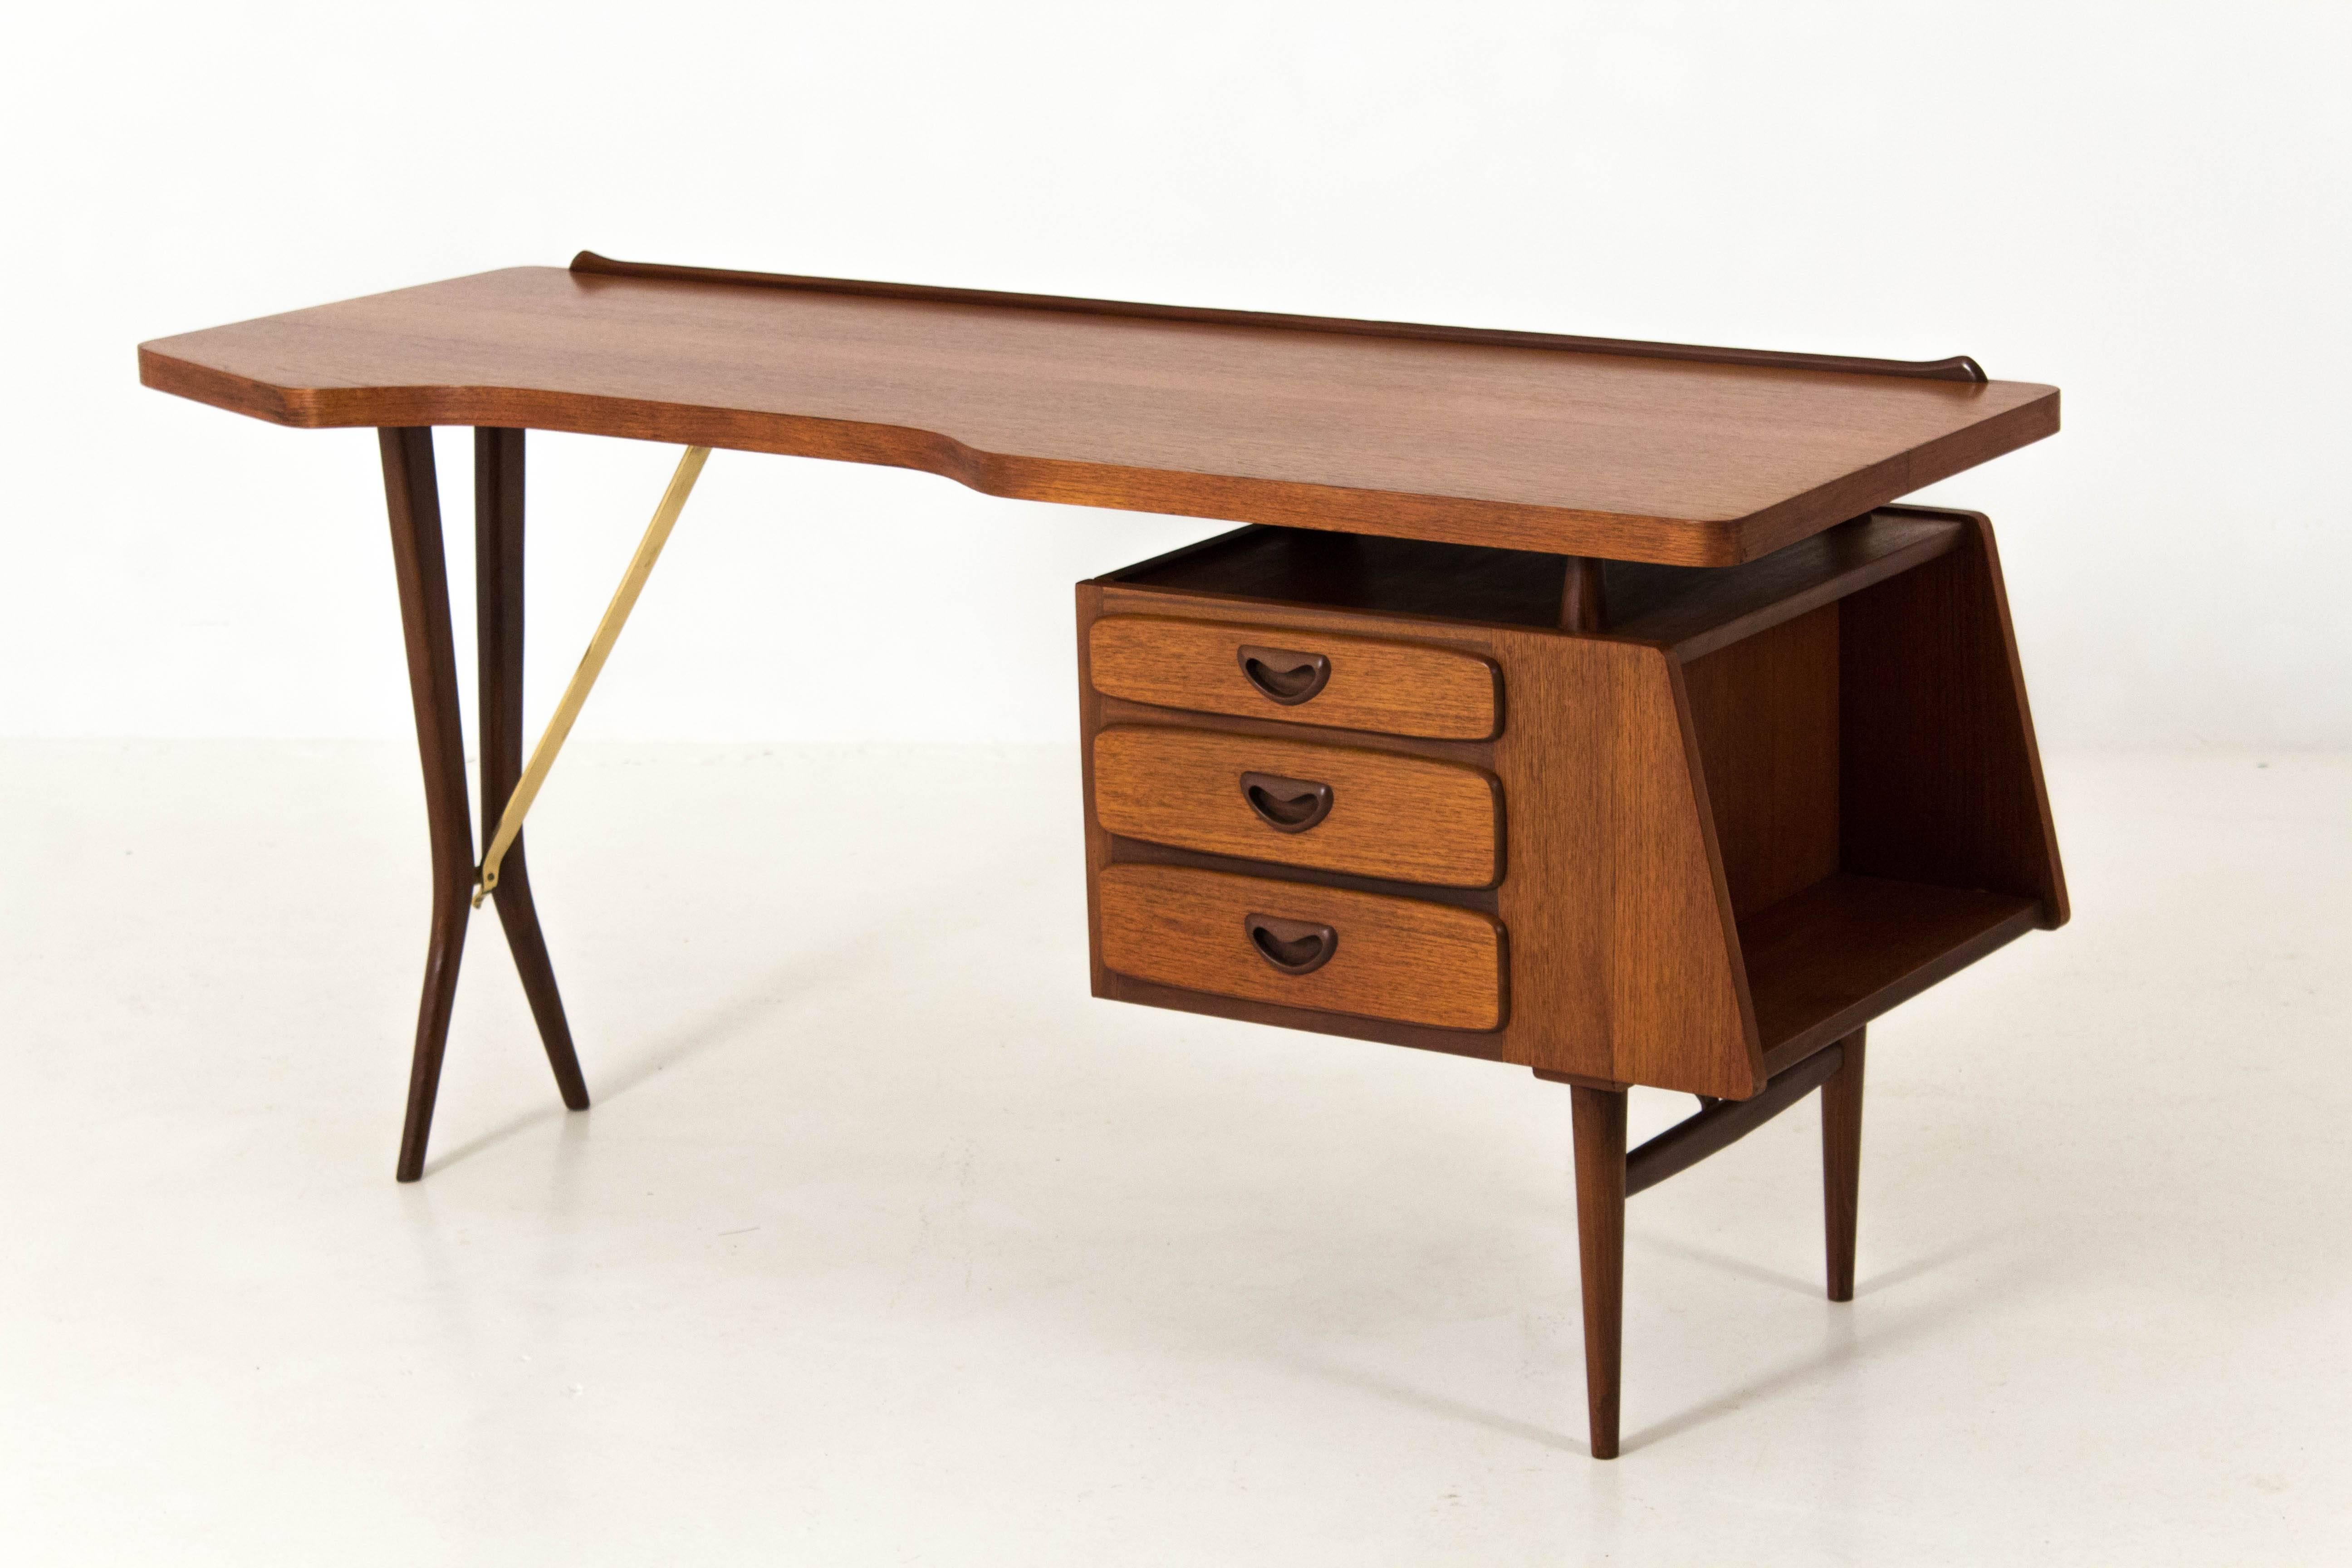 Dutch Iconic Mid-Century Modern Desk by Louis Van Teeffelen for Webe, 1959